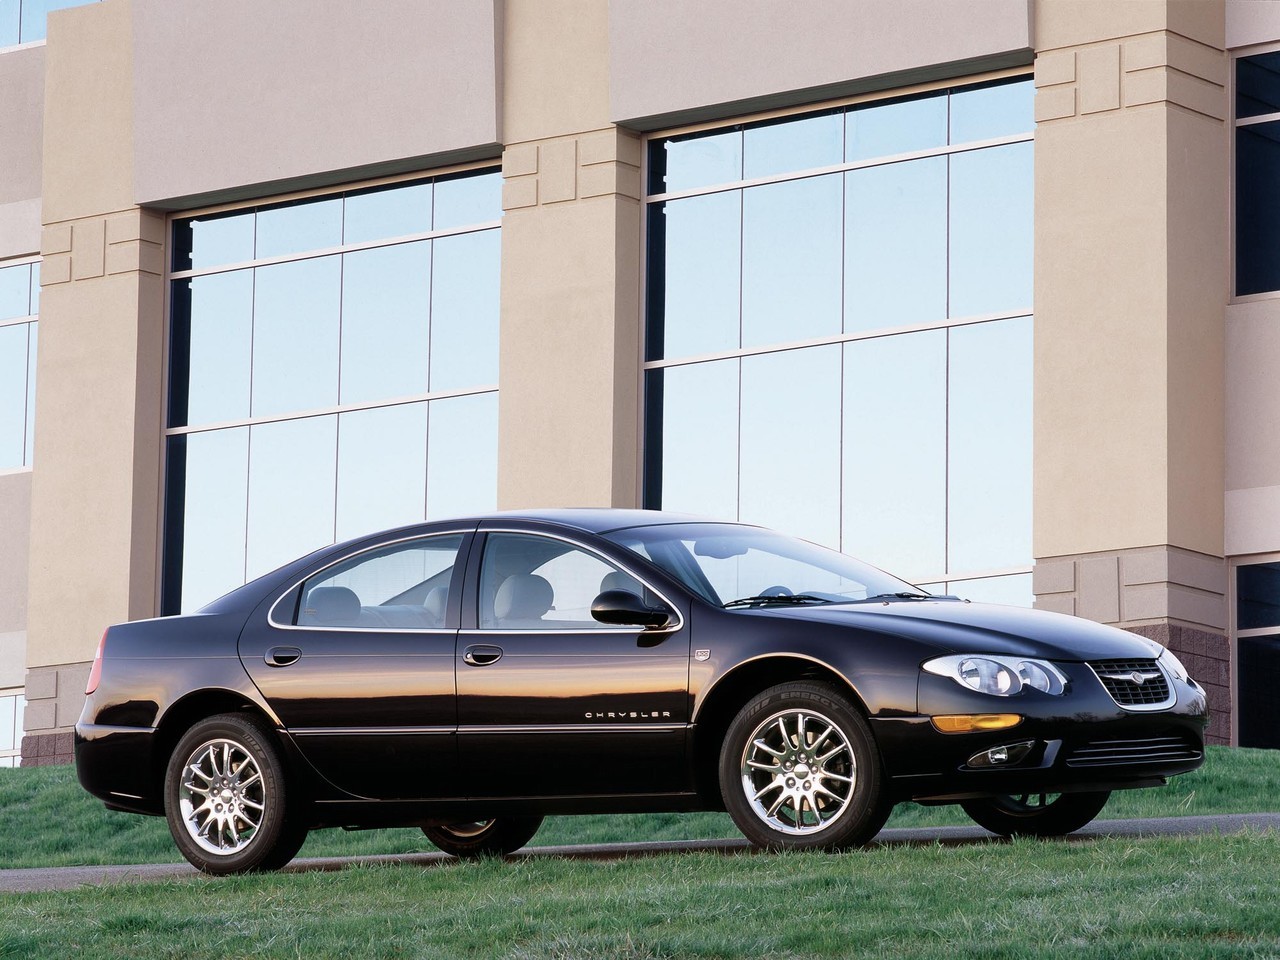 Chrysler 300m Specs And Photos 1998 1999 2000 2001 2002 2003 2004